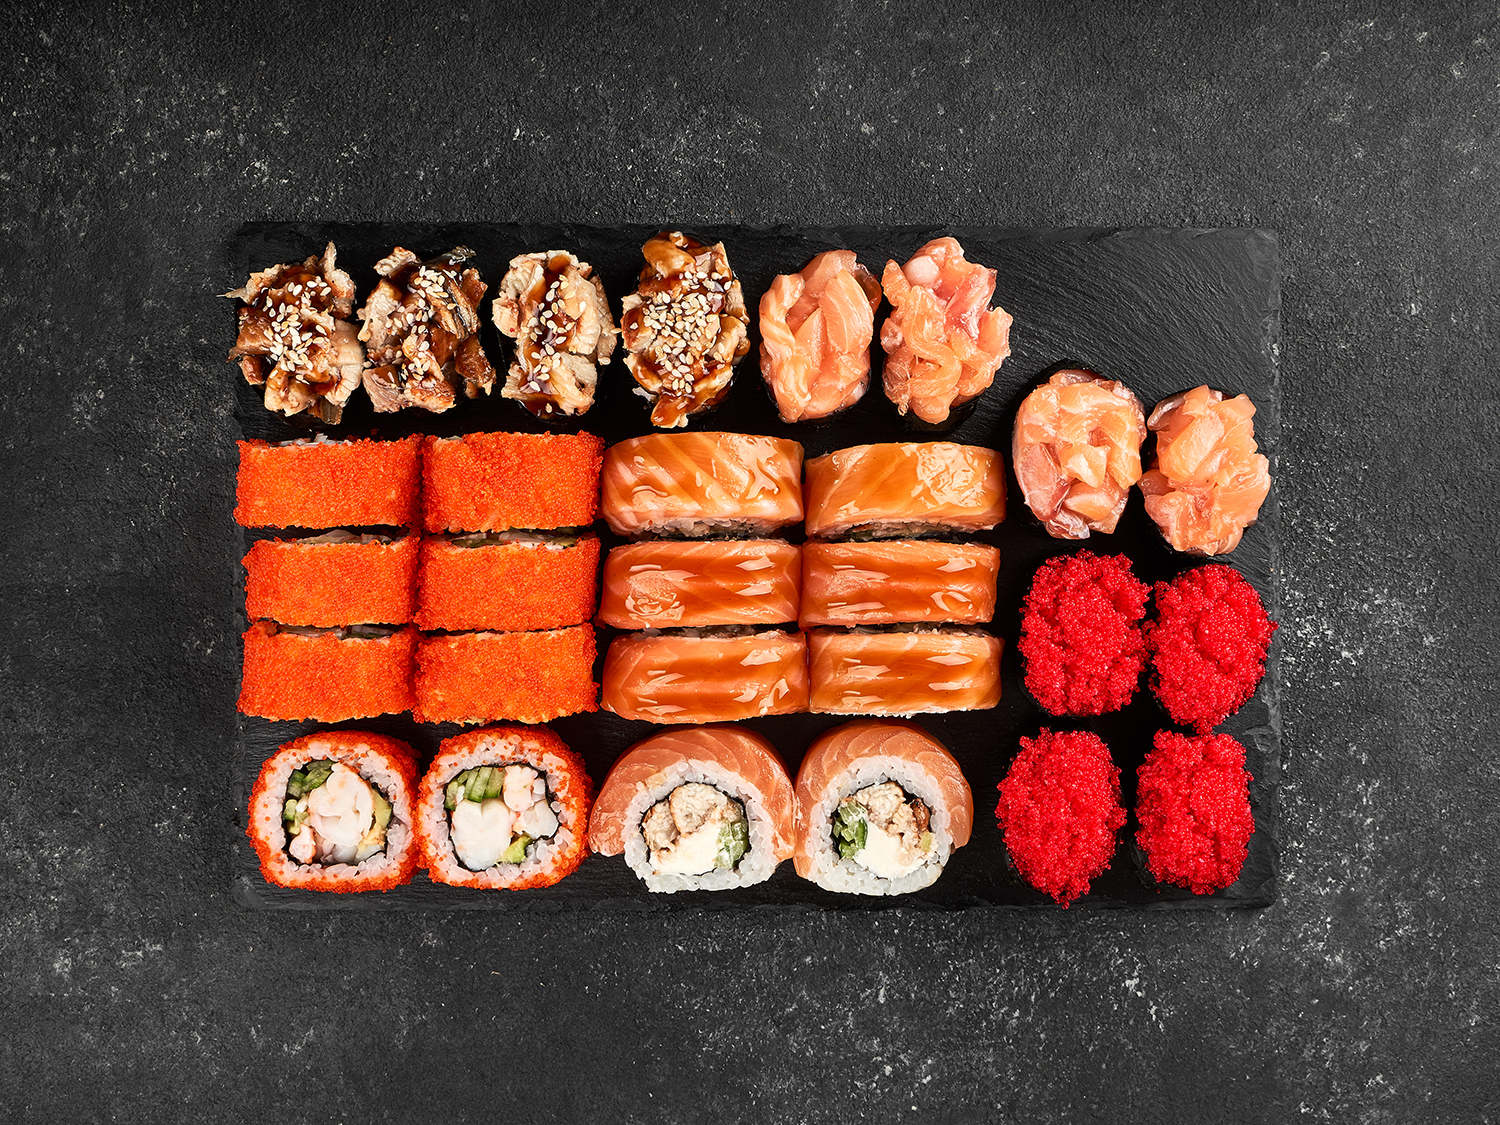 Доставка наборов суши в спб с доставкой фото 78